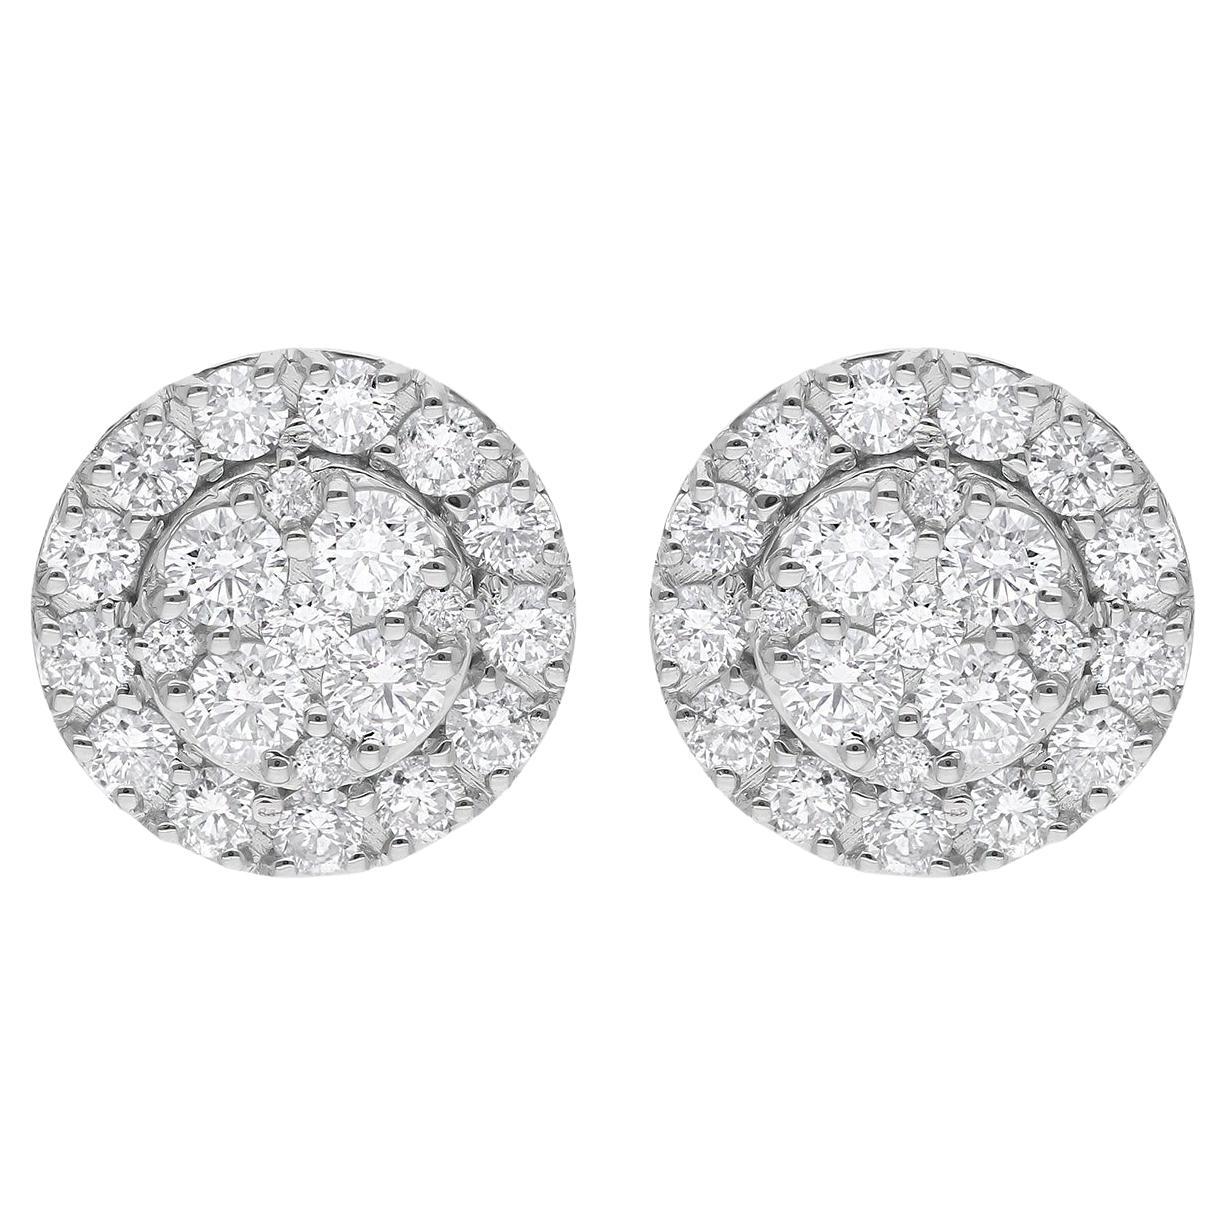 1.97 Carat SI Clarity HI Color Round Diamond Stud Earrings 14 Karat White Gold